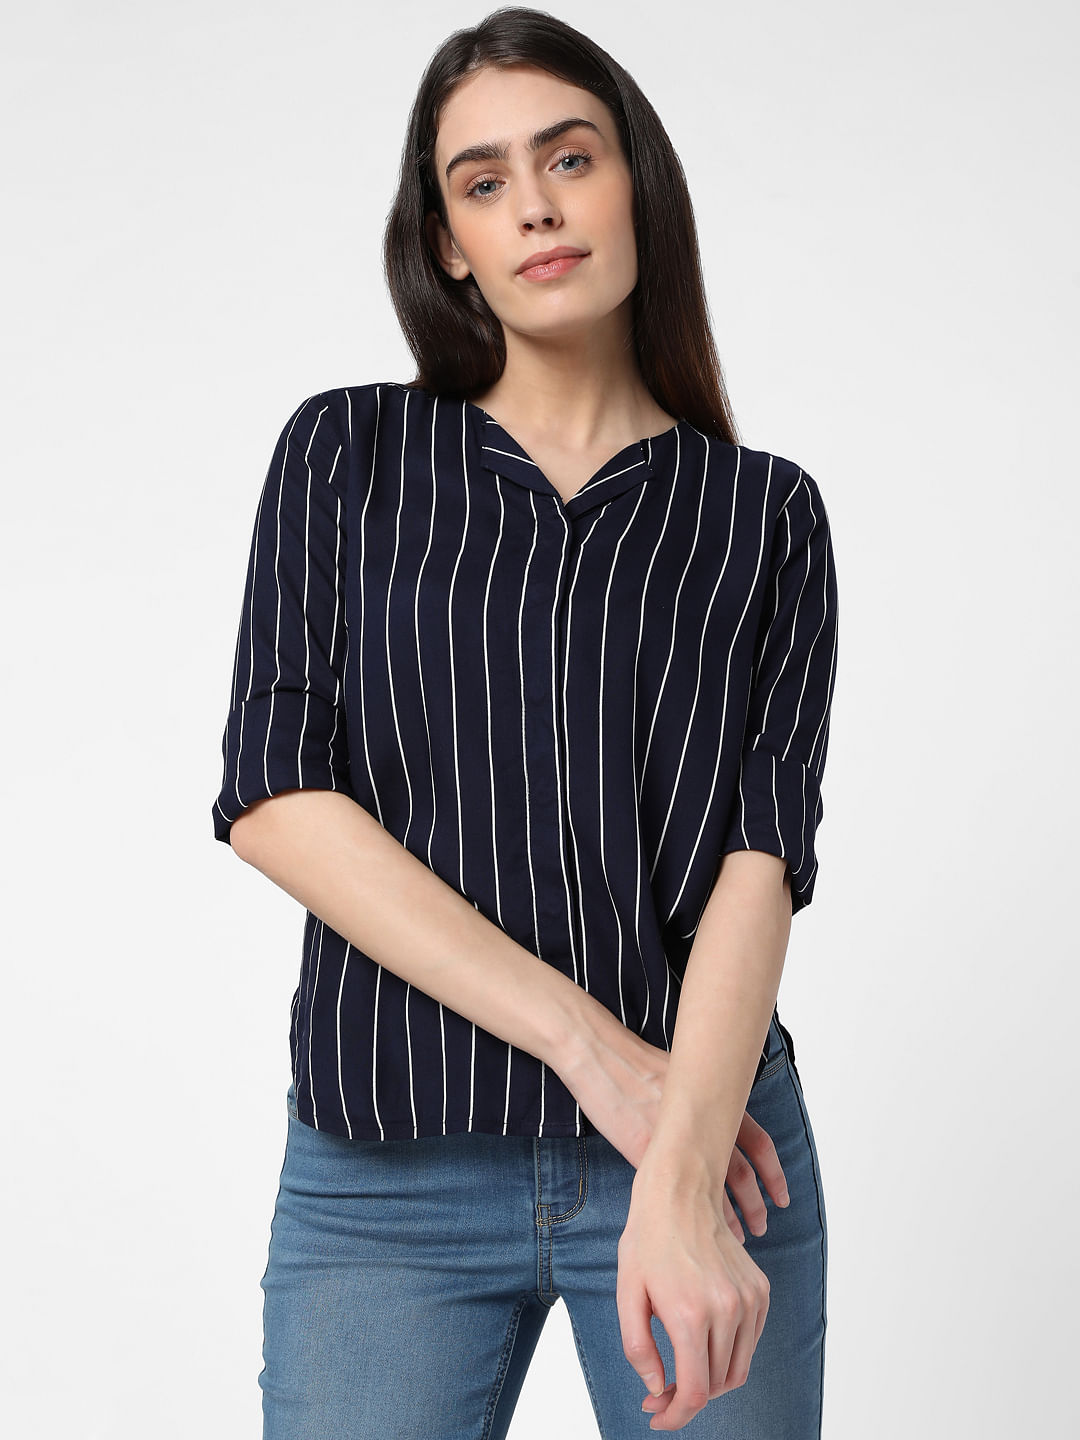 navy blue striped shirt womens